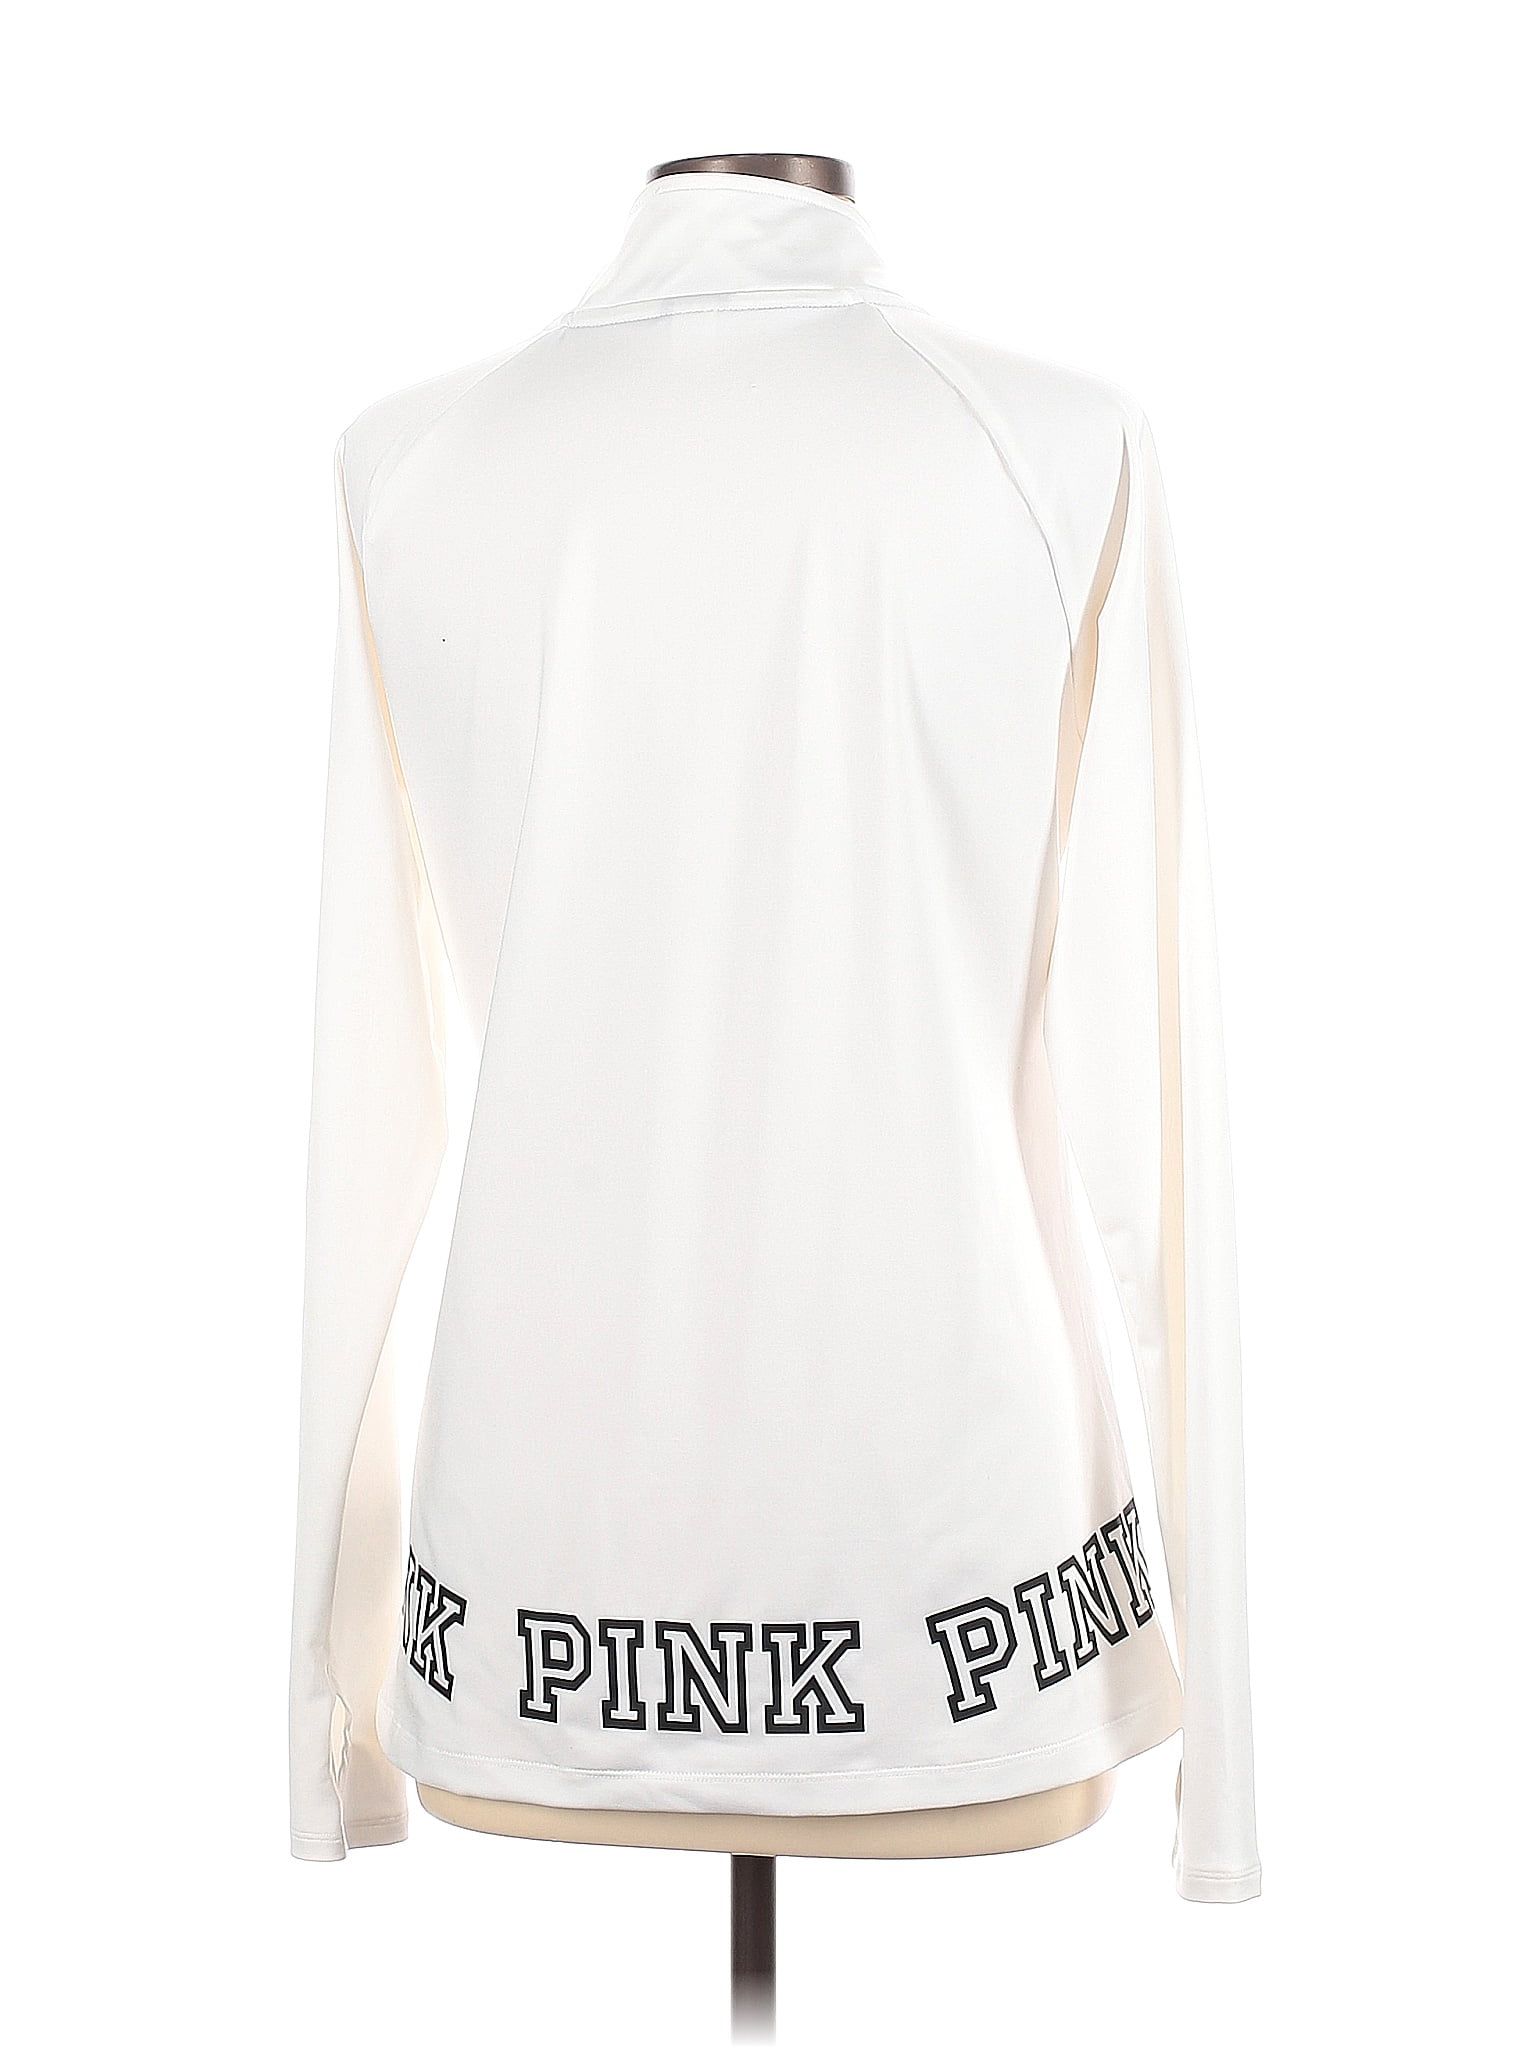 Victoria's Secret Pink White Track Jacket Size L - 54% off